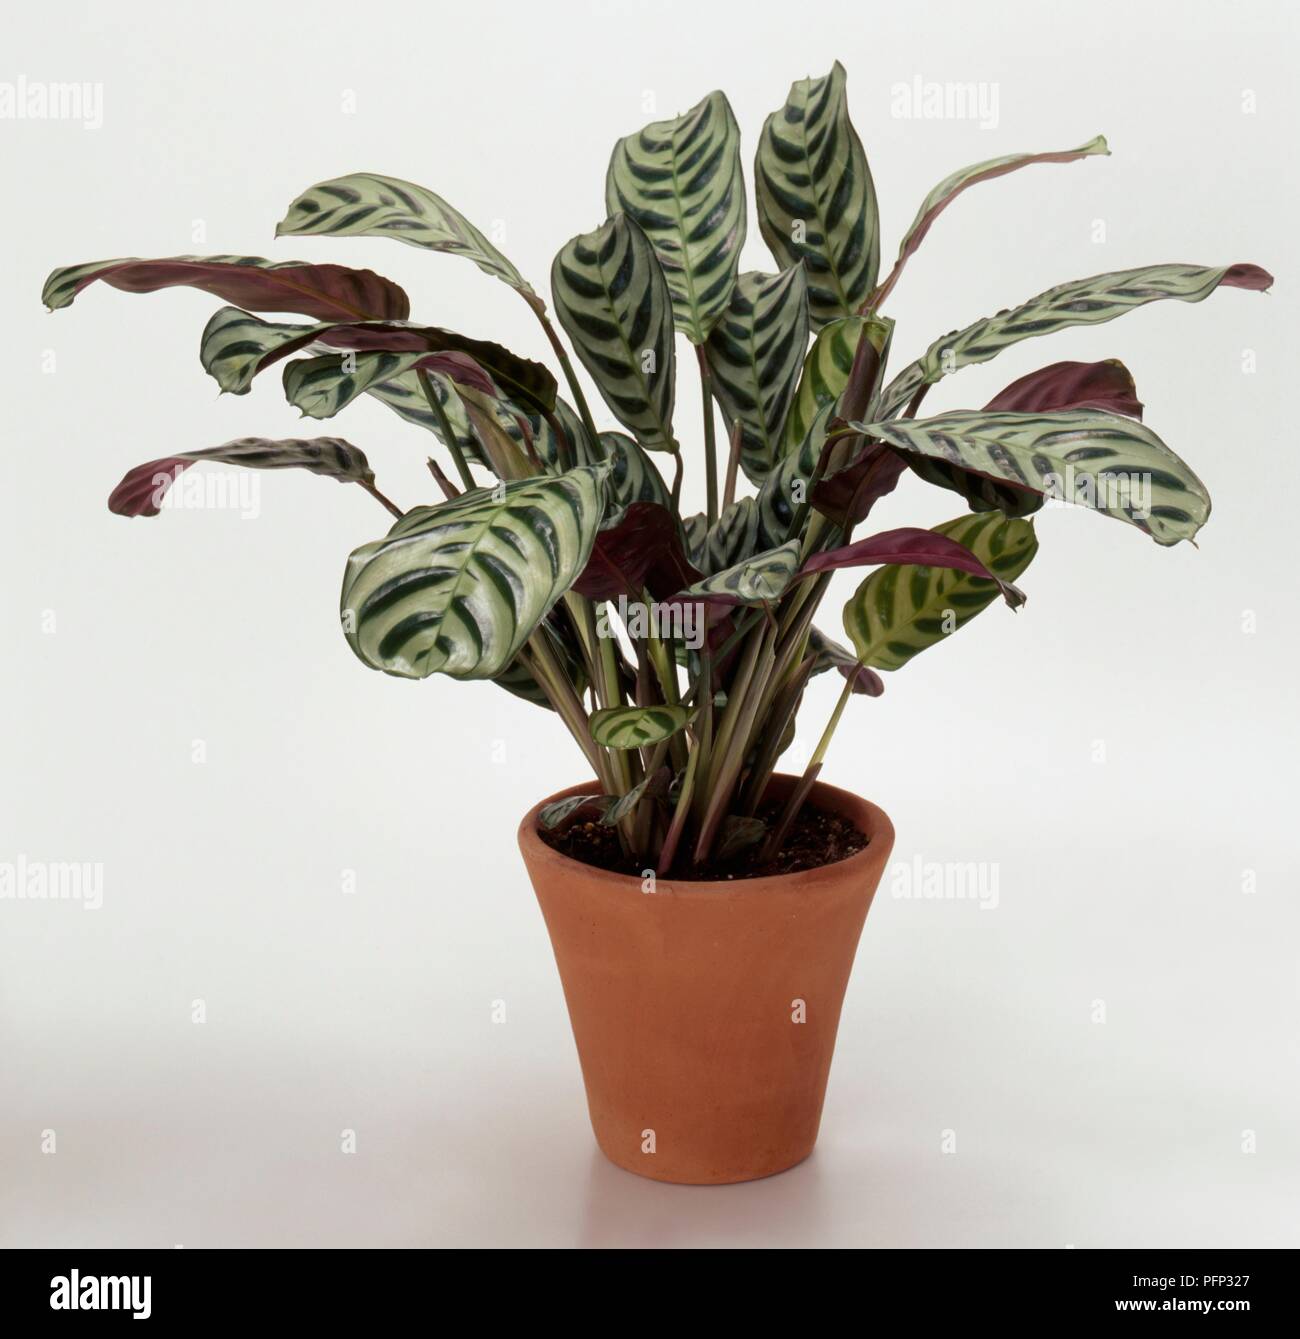 Gestreifte - Blatt Ctenanthe amabilis Pflanze in Terrakotta Topf  Stockfotografie - Alamy